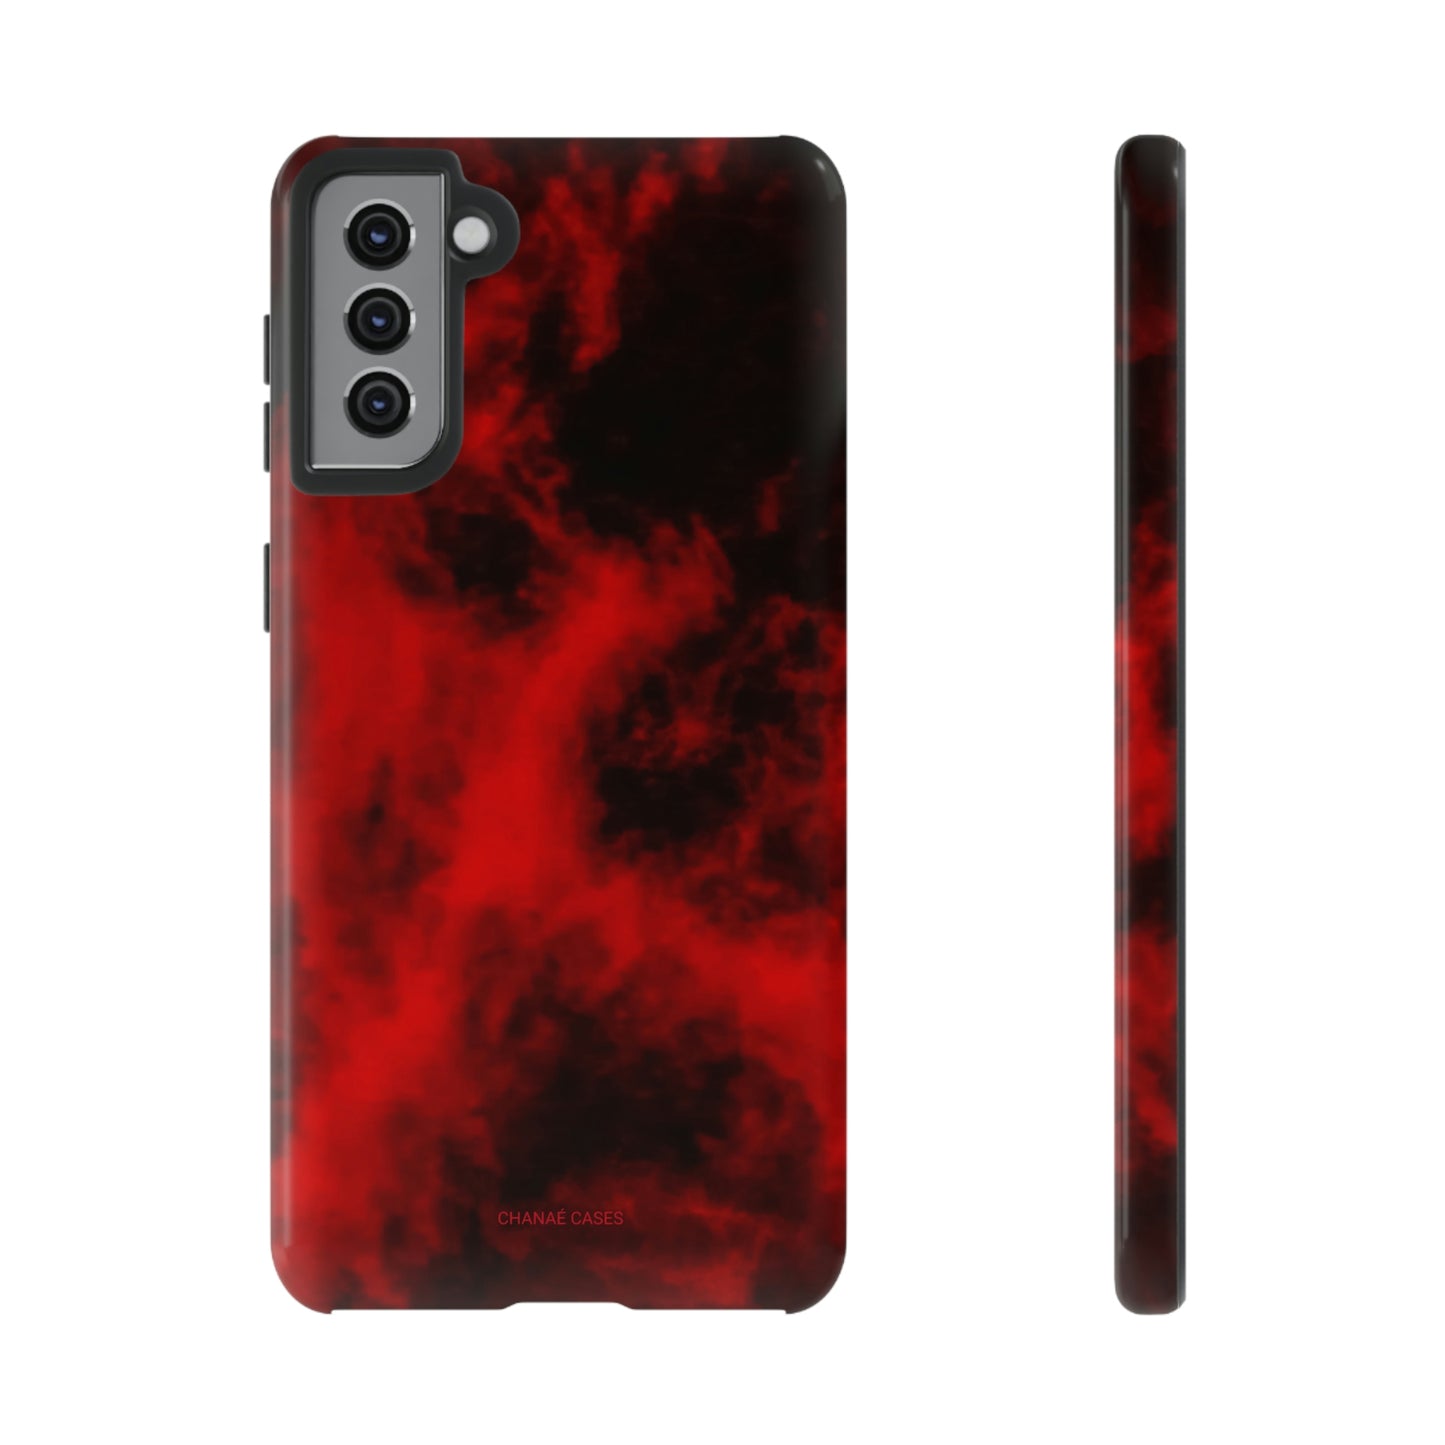 Fury Samsung "Tough" Case (Red/Black)